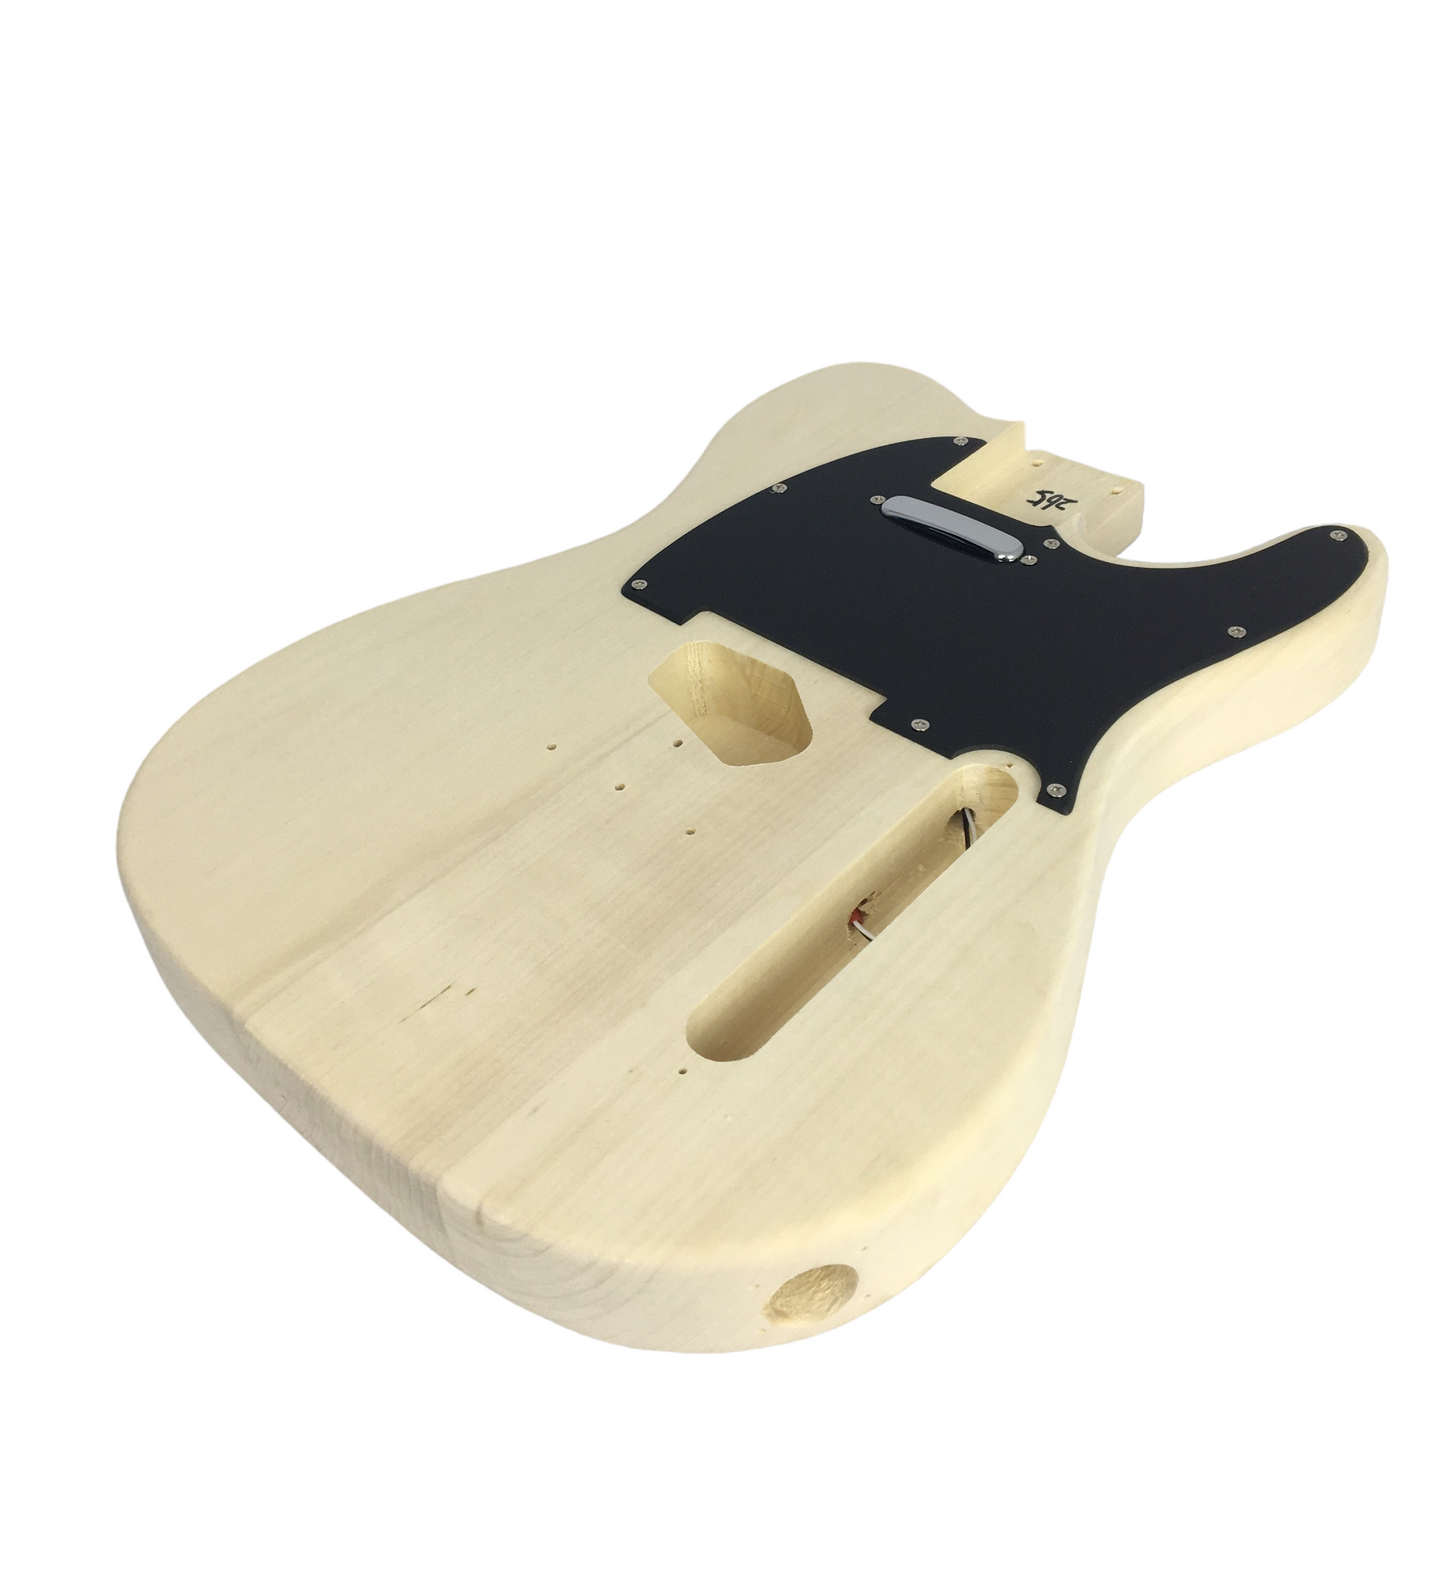 HSTL19100WBDIY Solid Basswood Body Electric Guitar DIY Kit, No-Soldering, S-S